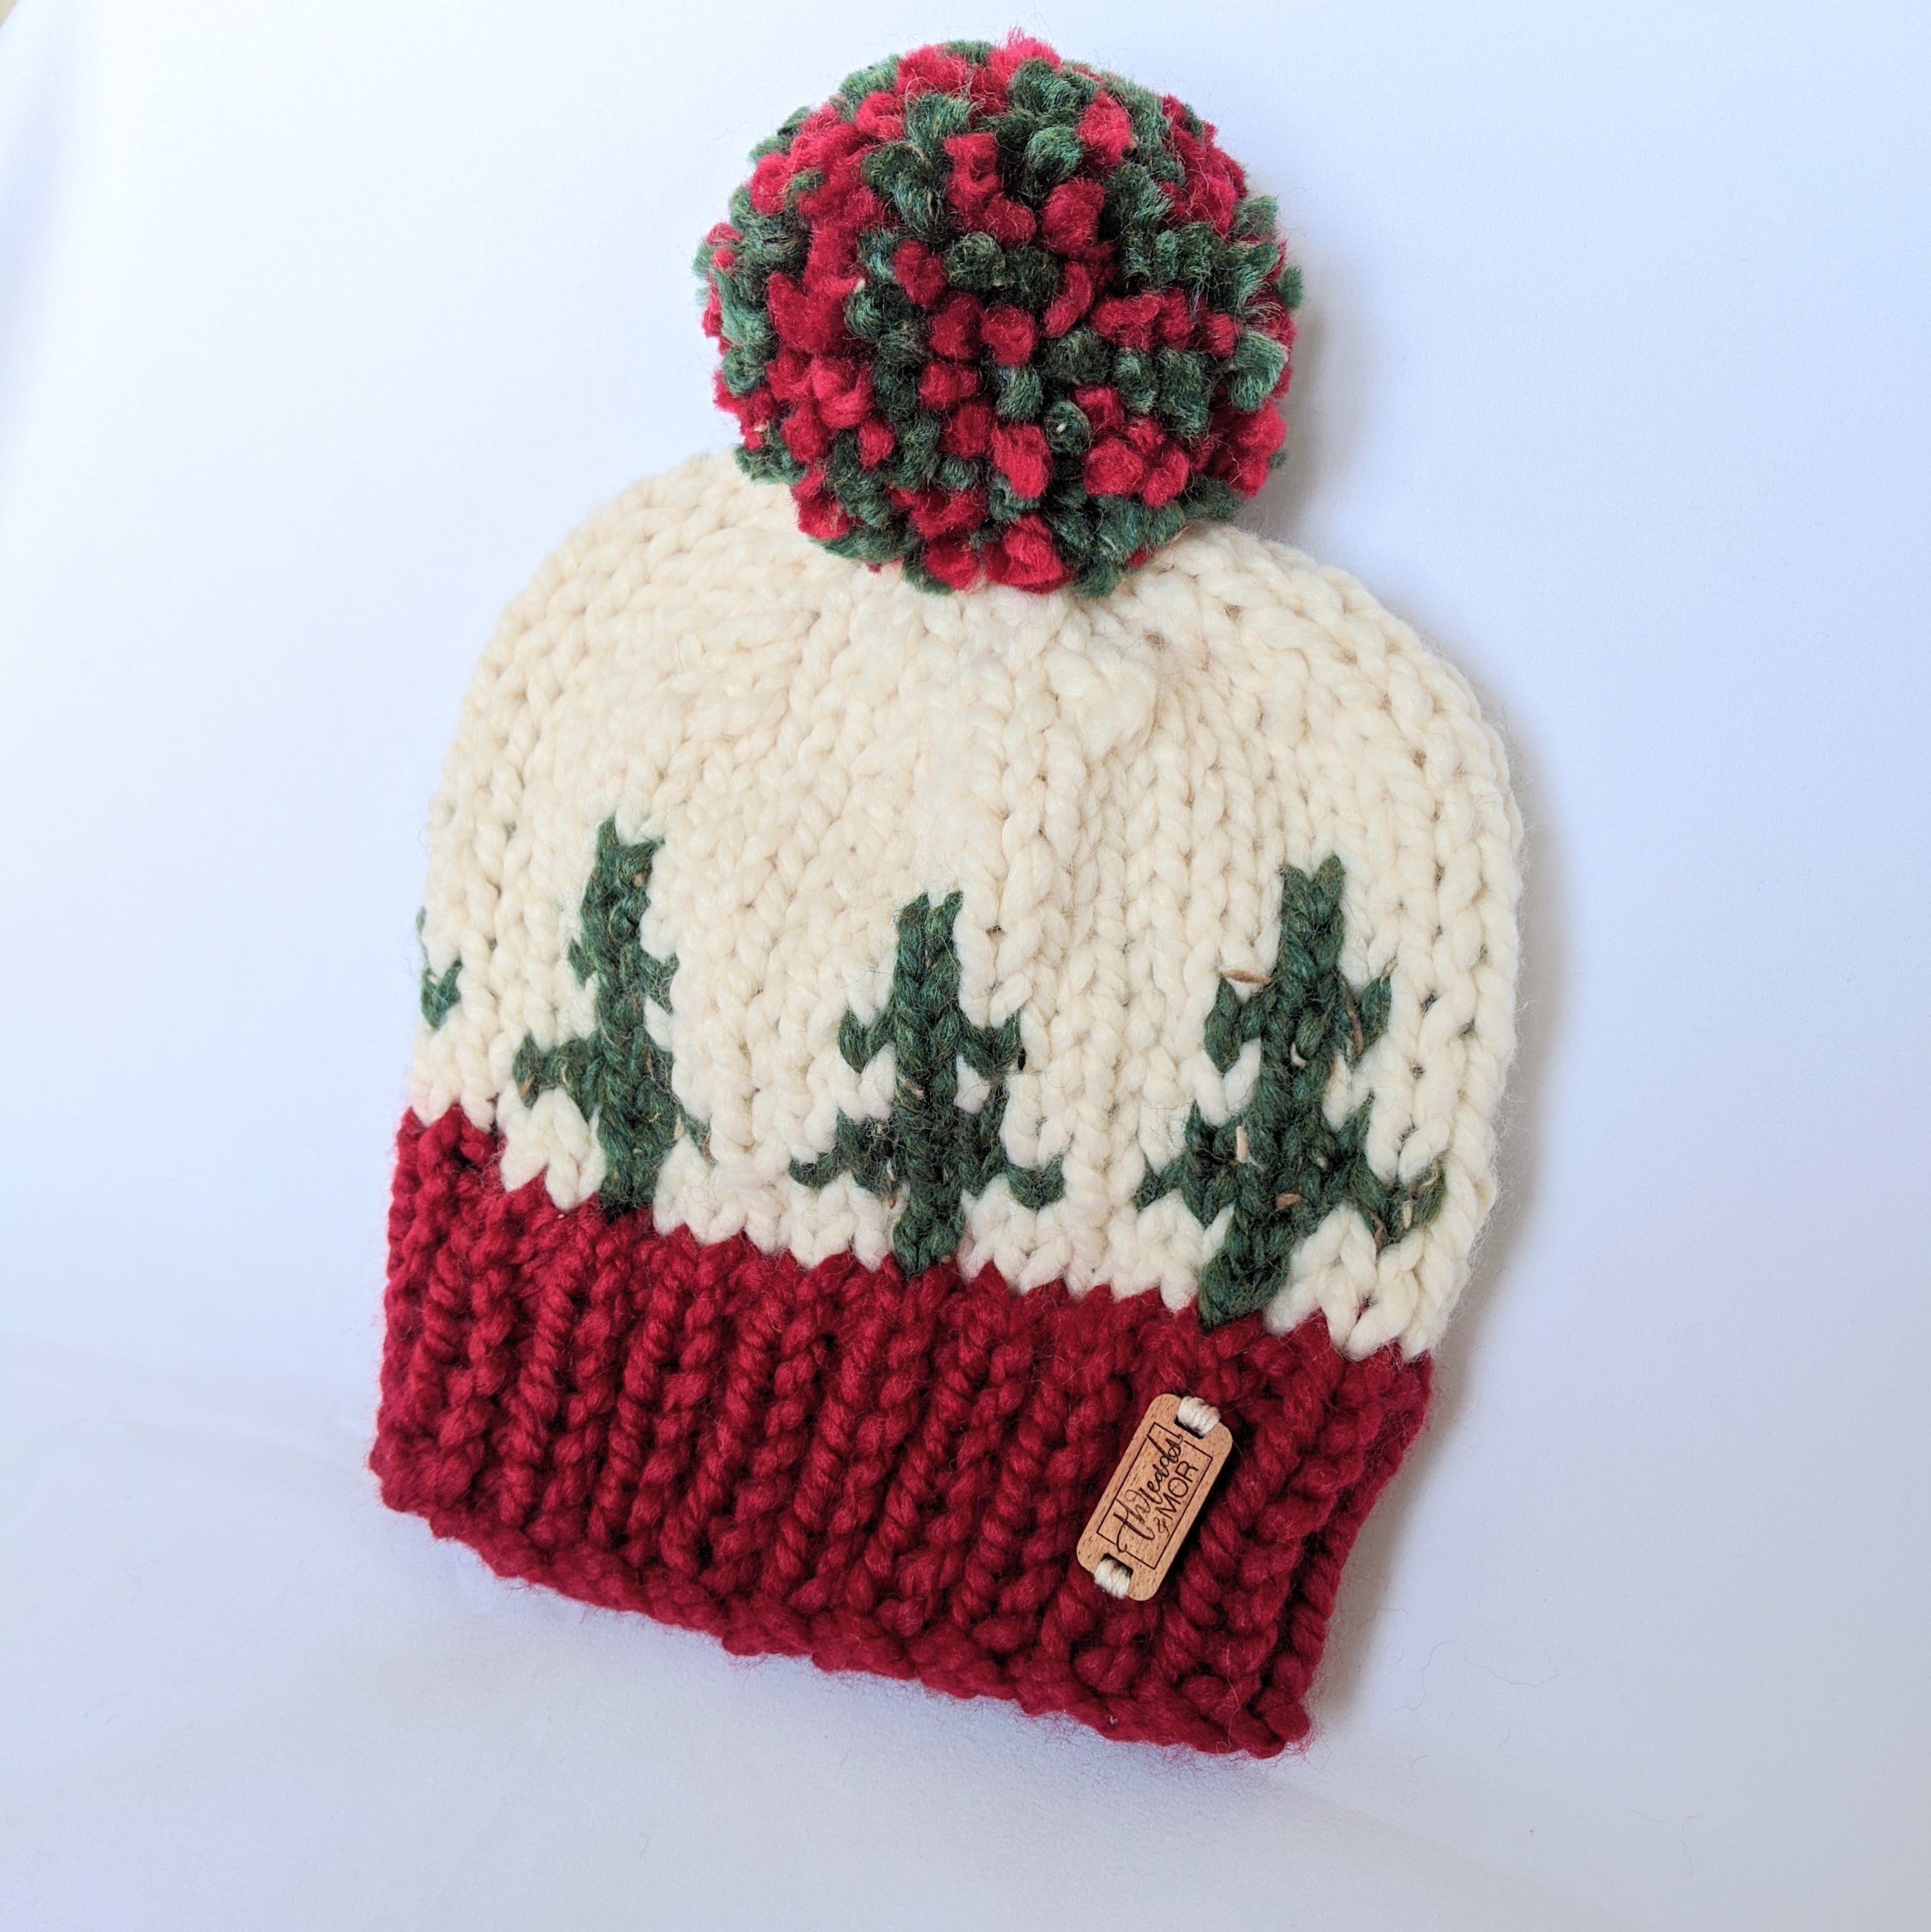 Holiday Spirit knit hat with yarn pompom